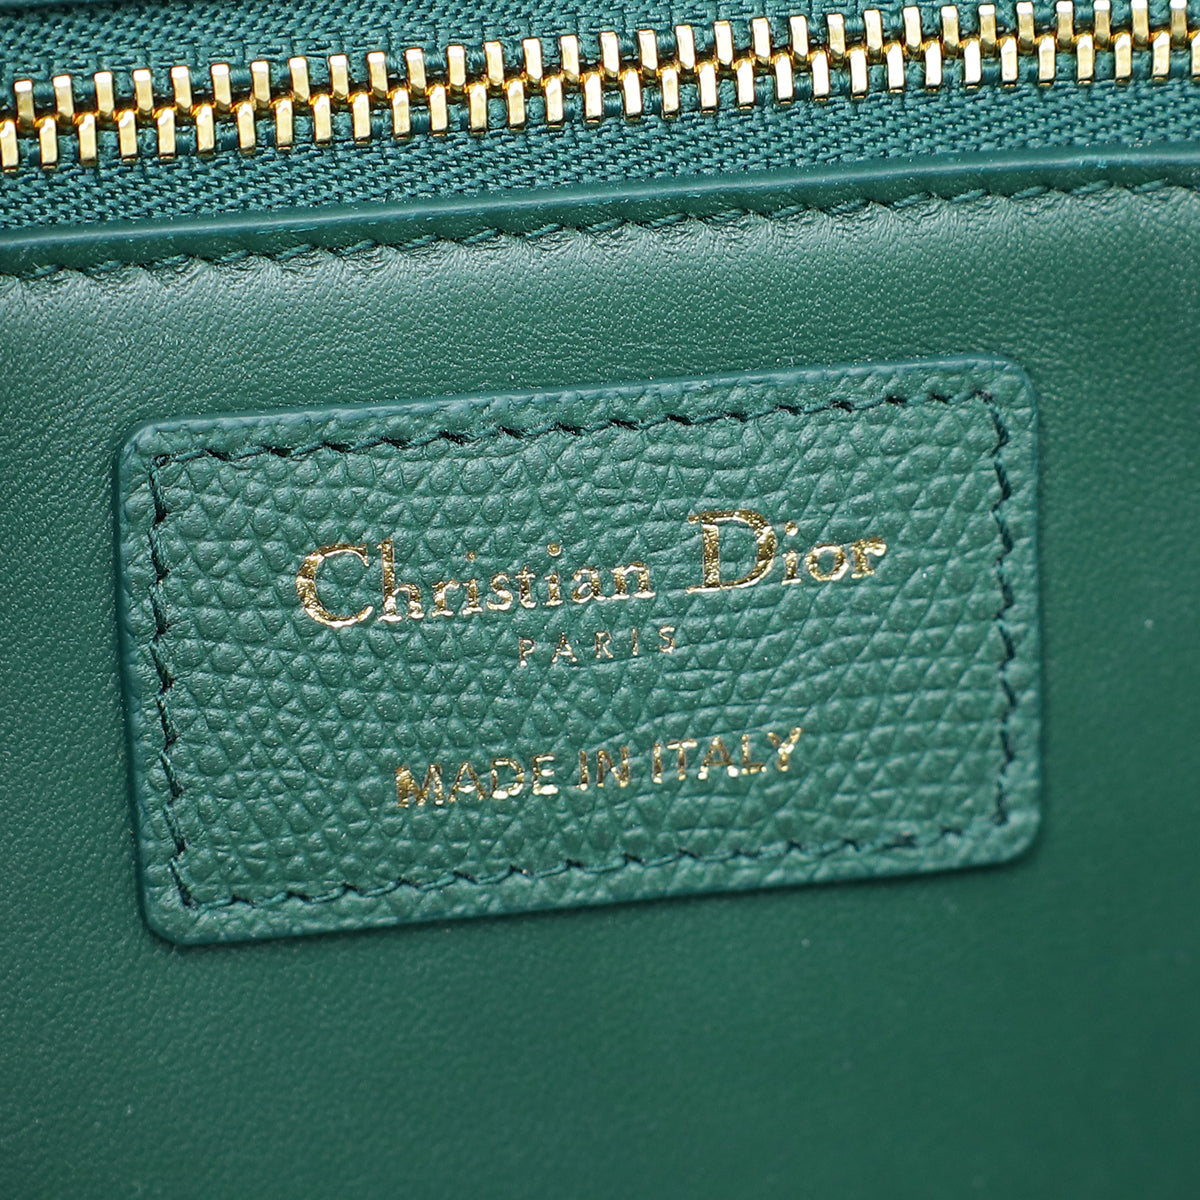 Christian Dior Dark Green 30 Montaigne Flap Medium Shoulder Bag